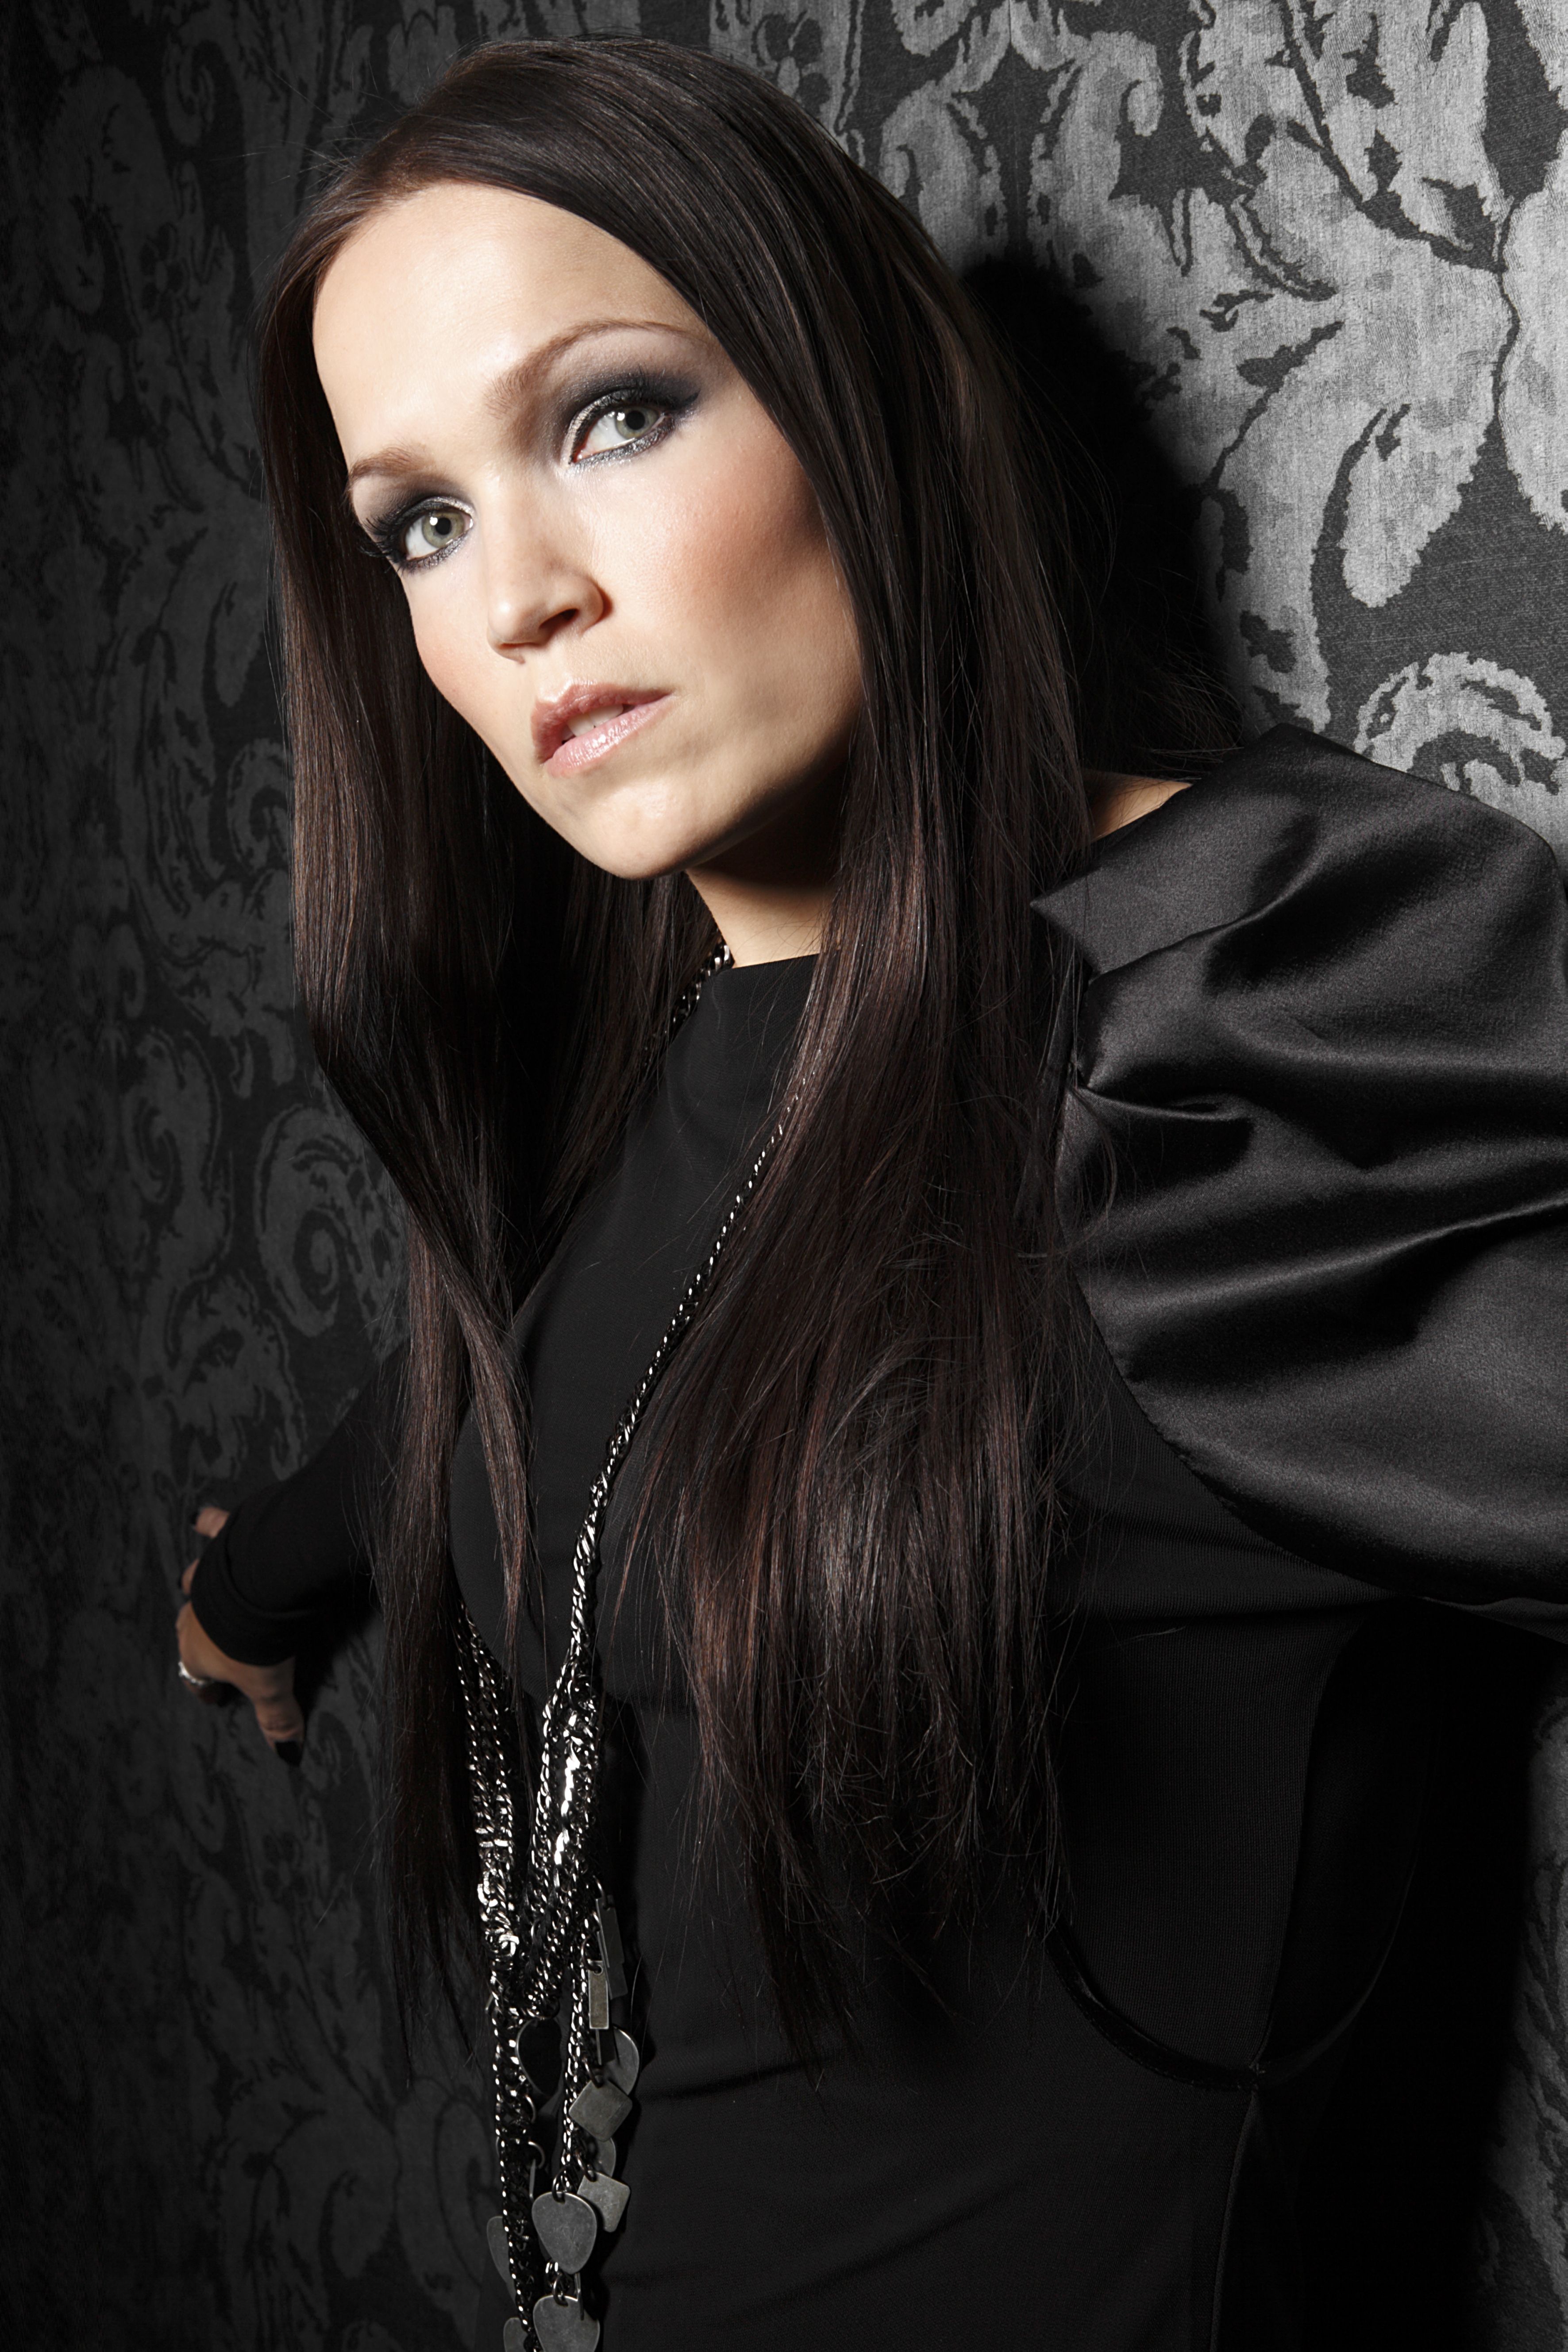 Singer Tarja Turunen criticized the Russian show 